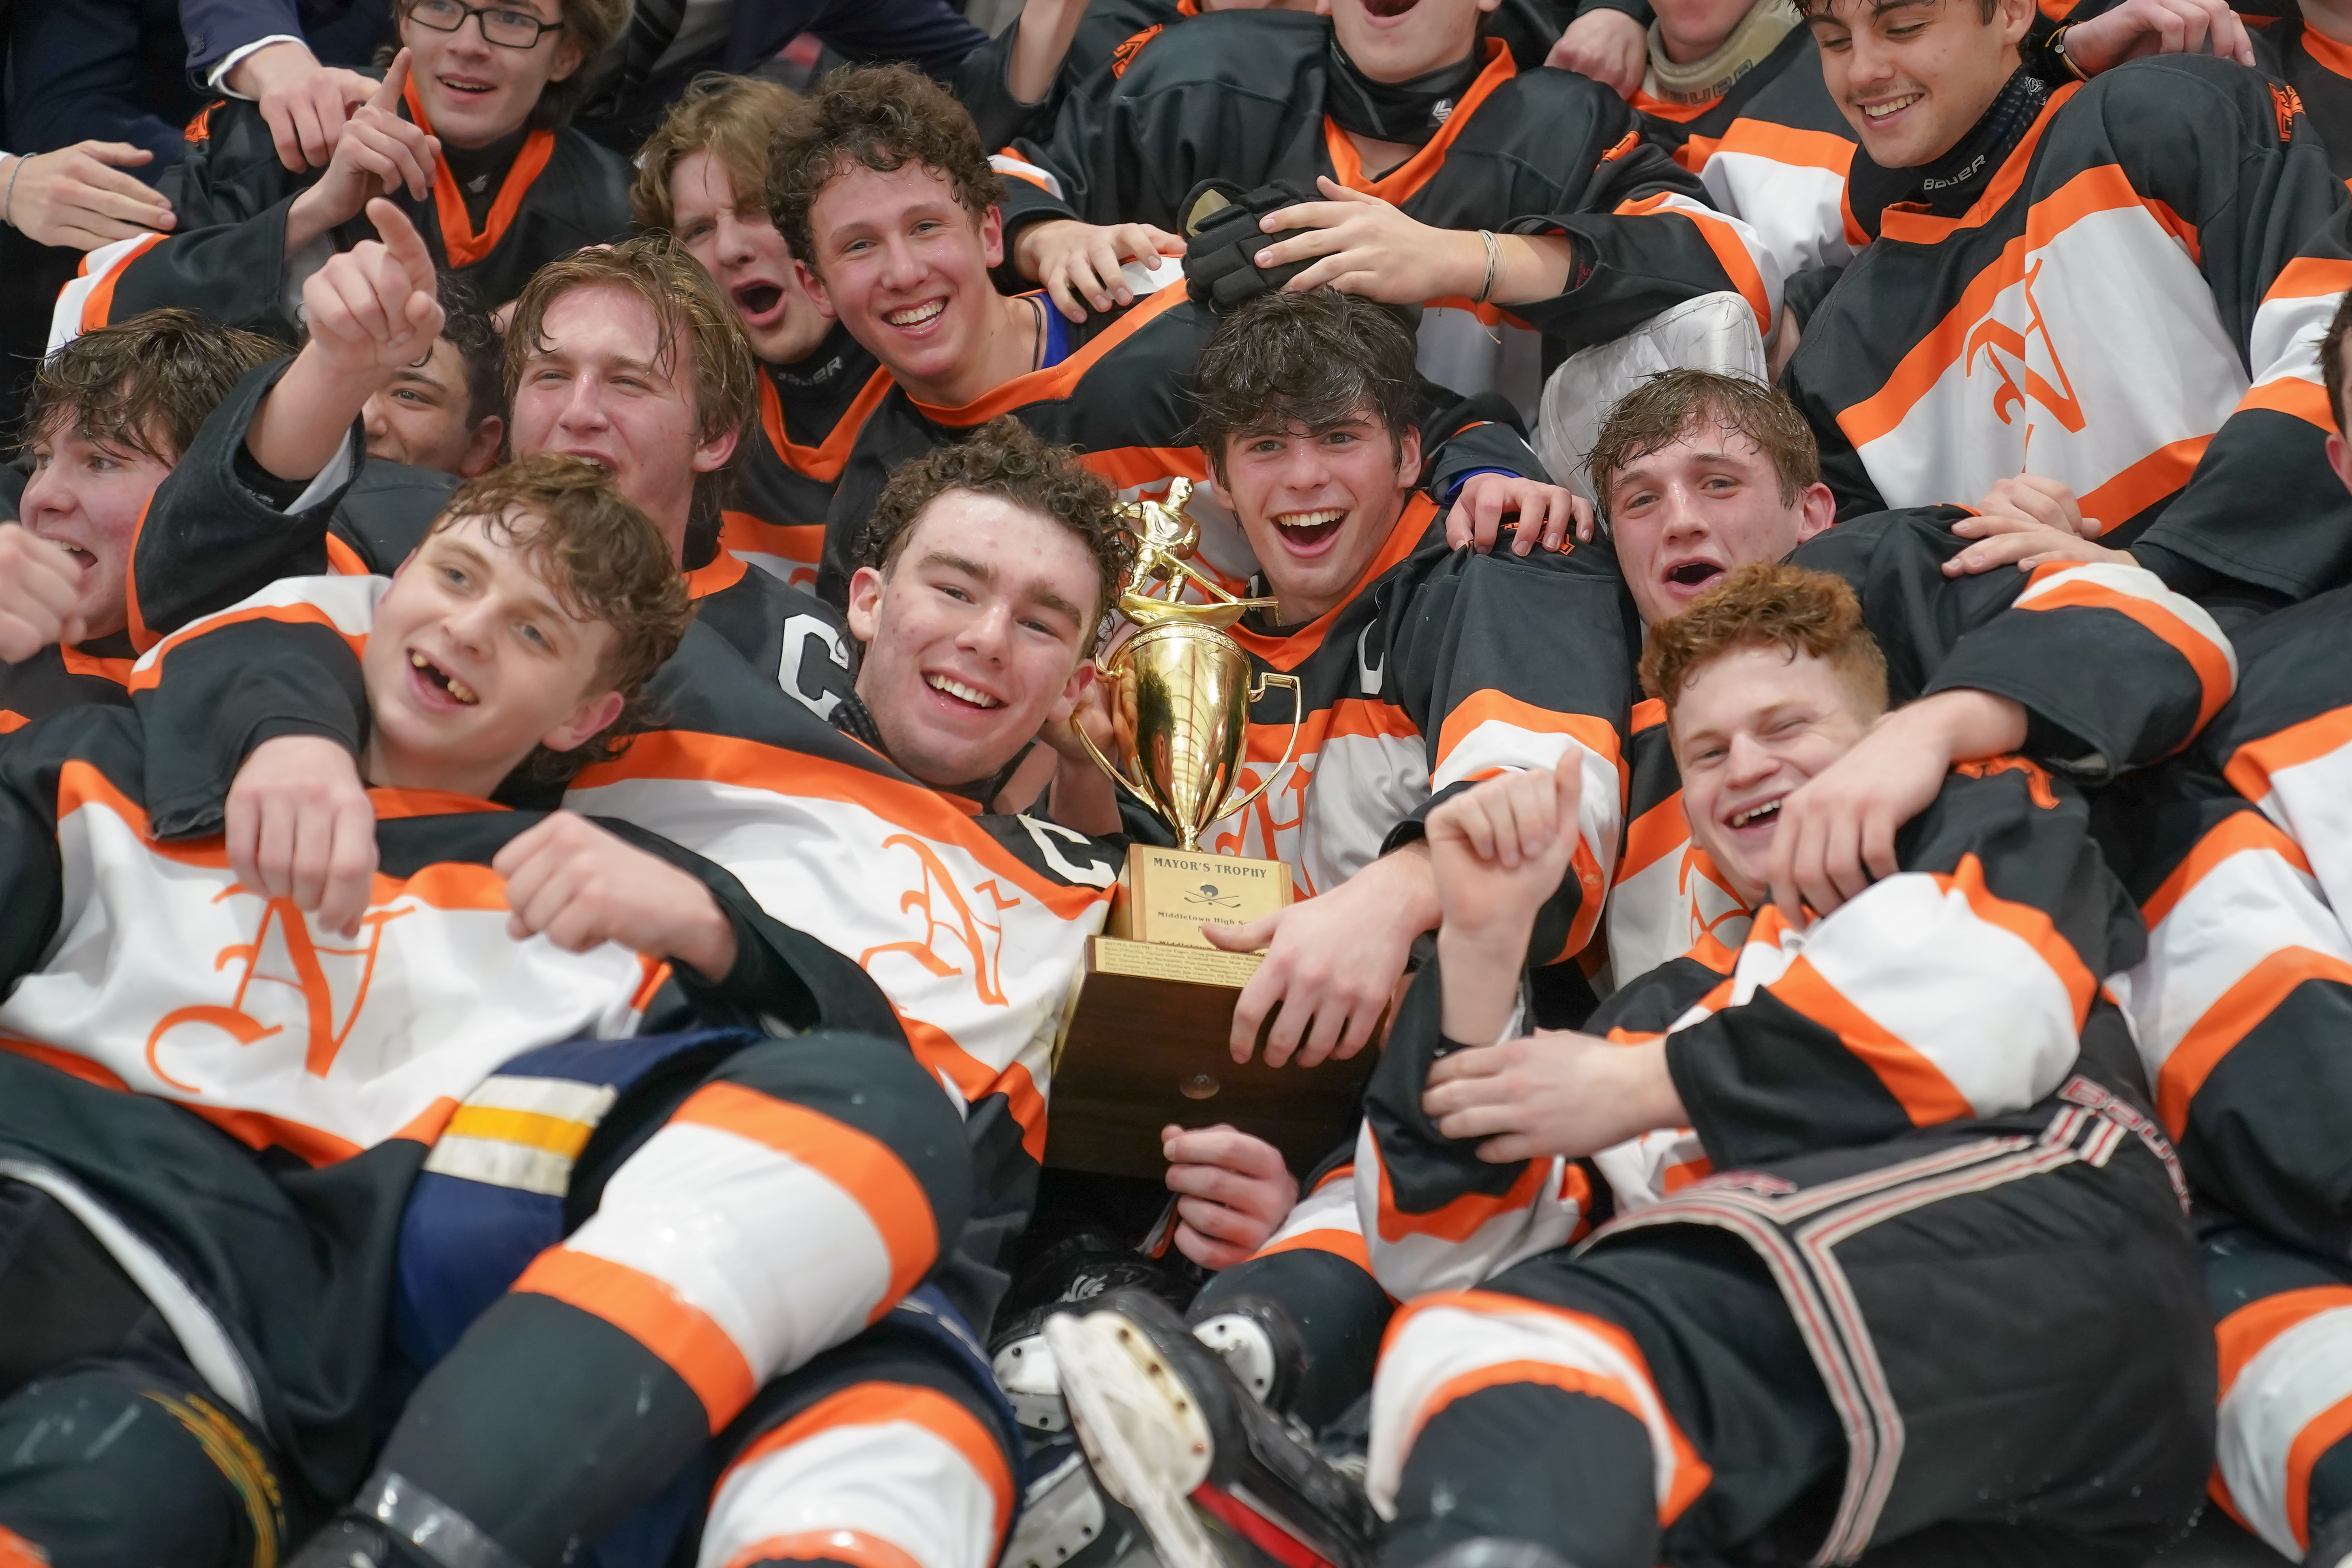 Mayor's Cup Hockey Tournament begins December 15